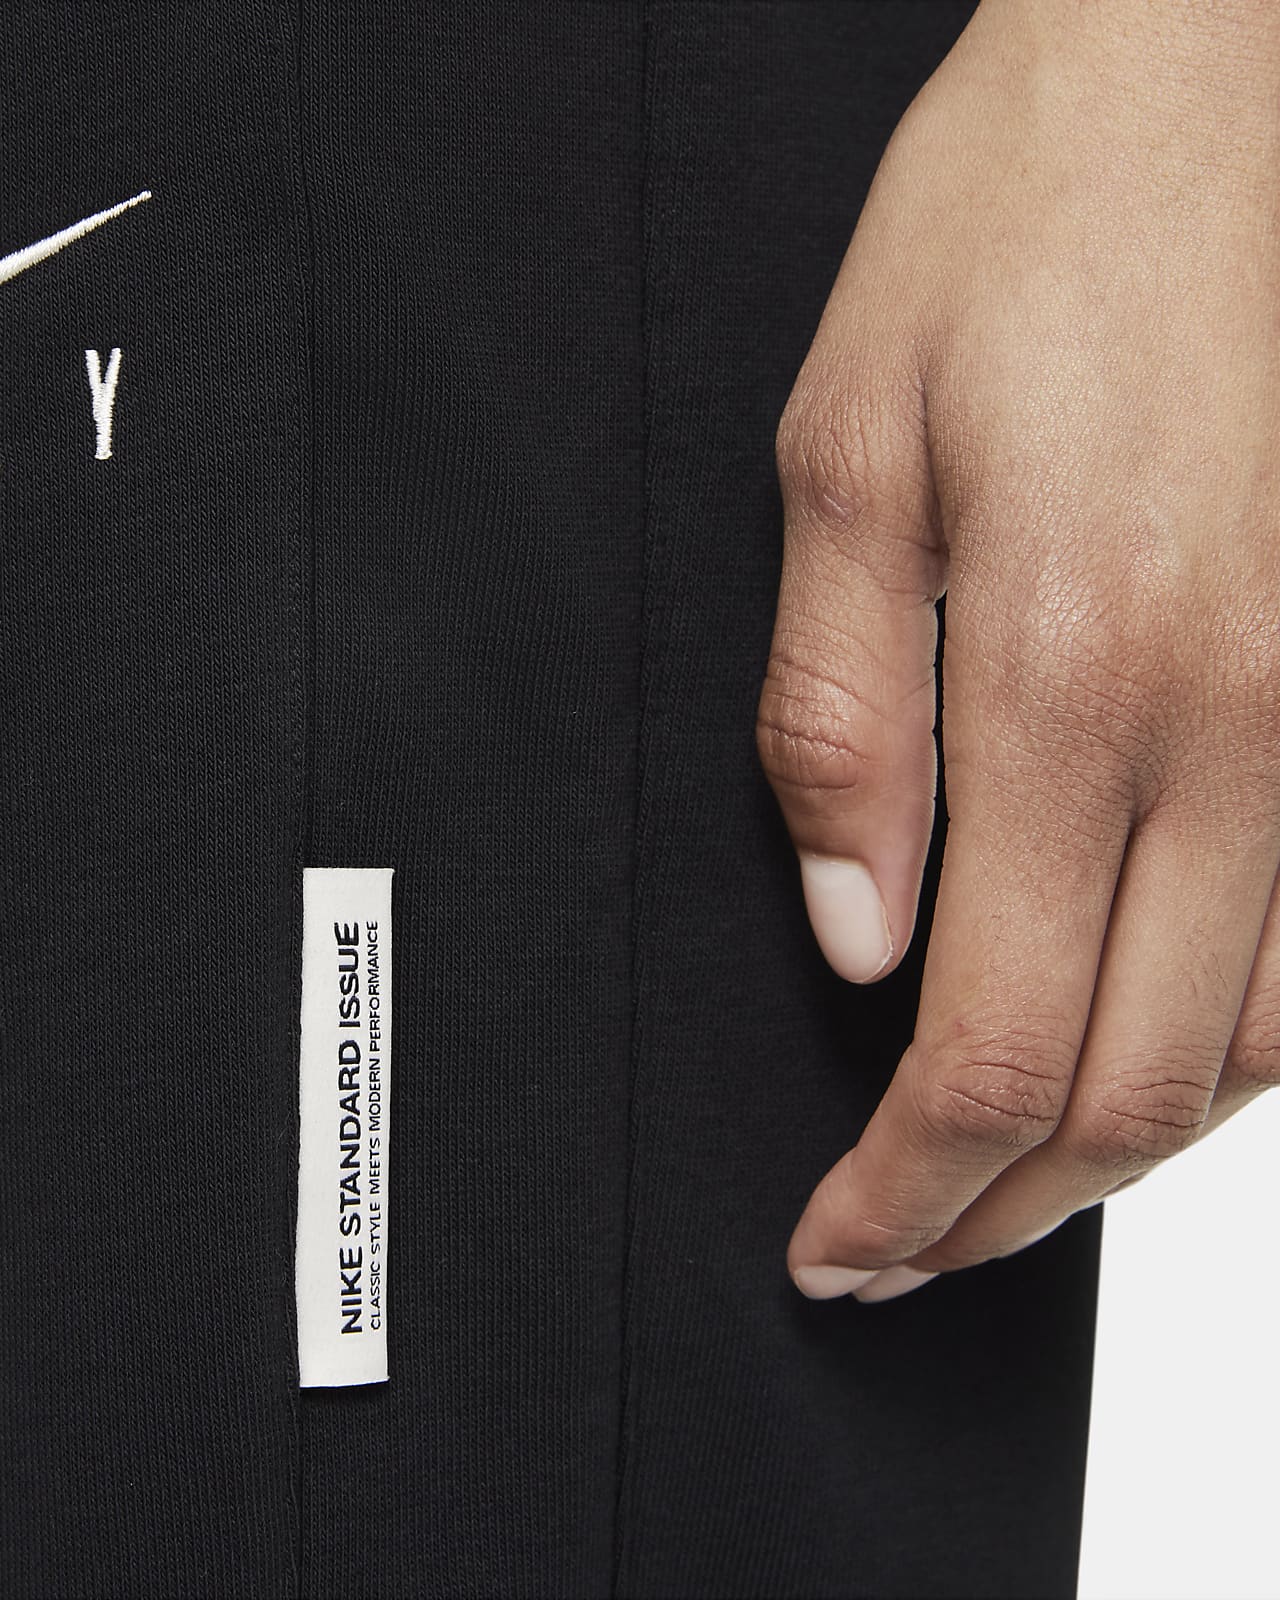 Nike Basketball Fly Standard Issue Sweatpants in Black - Black